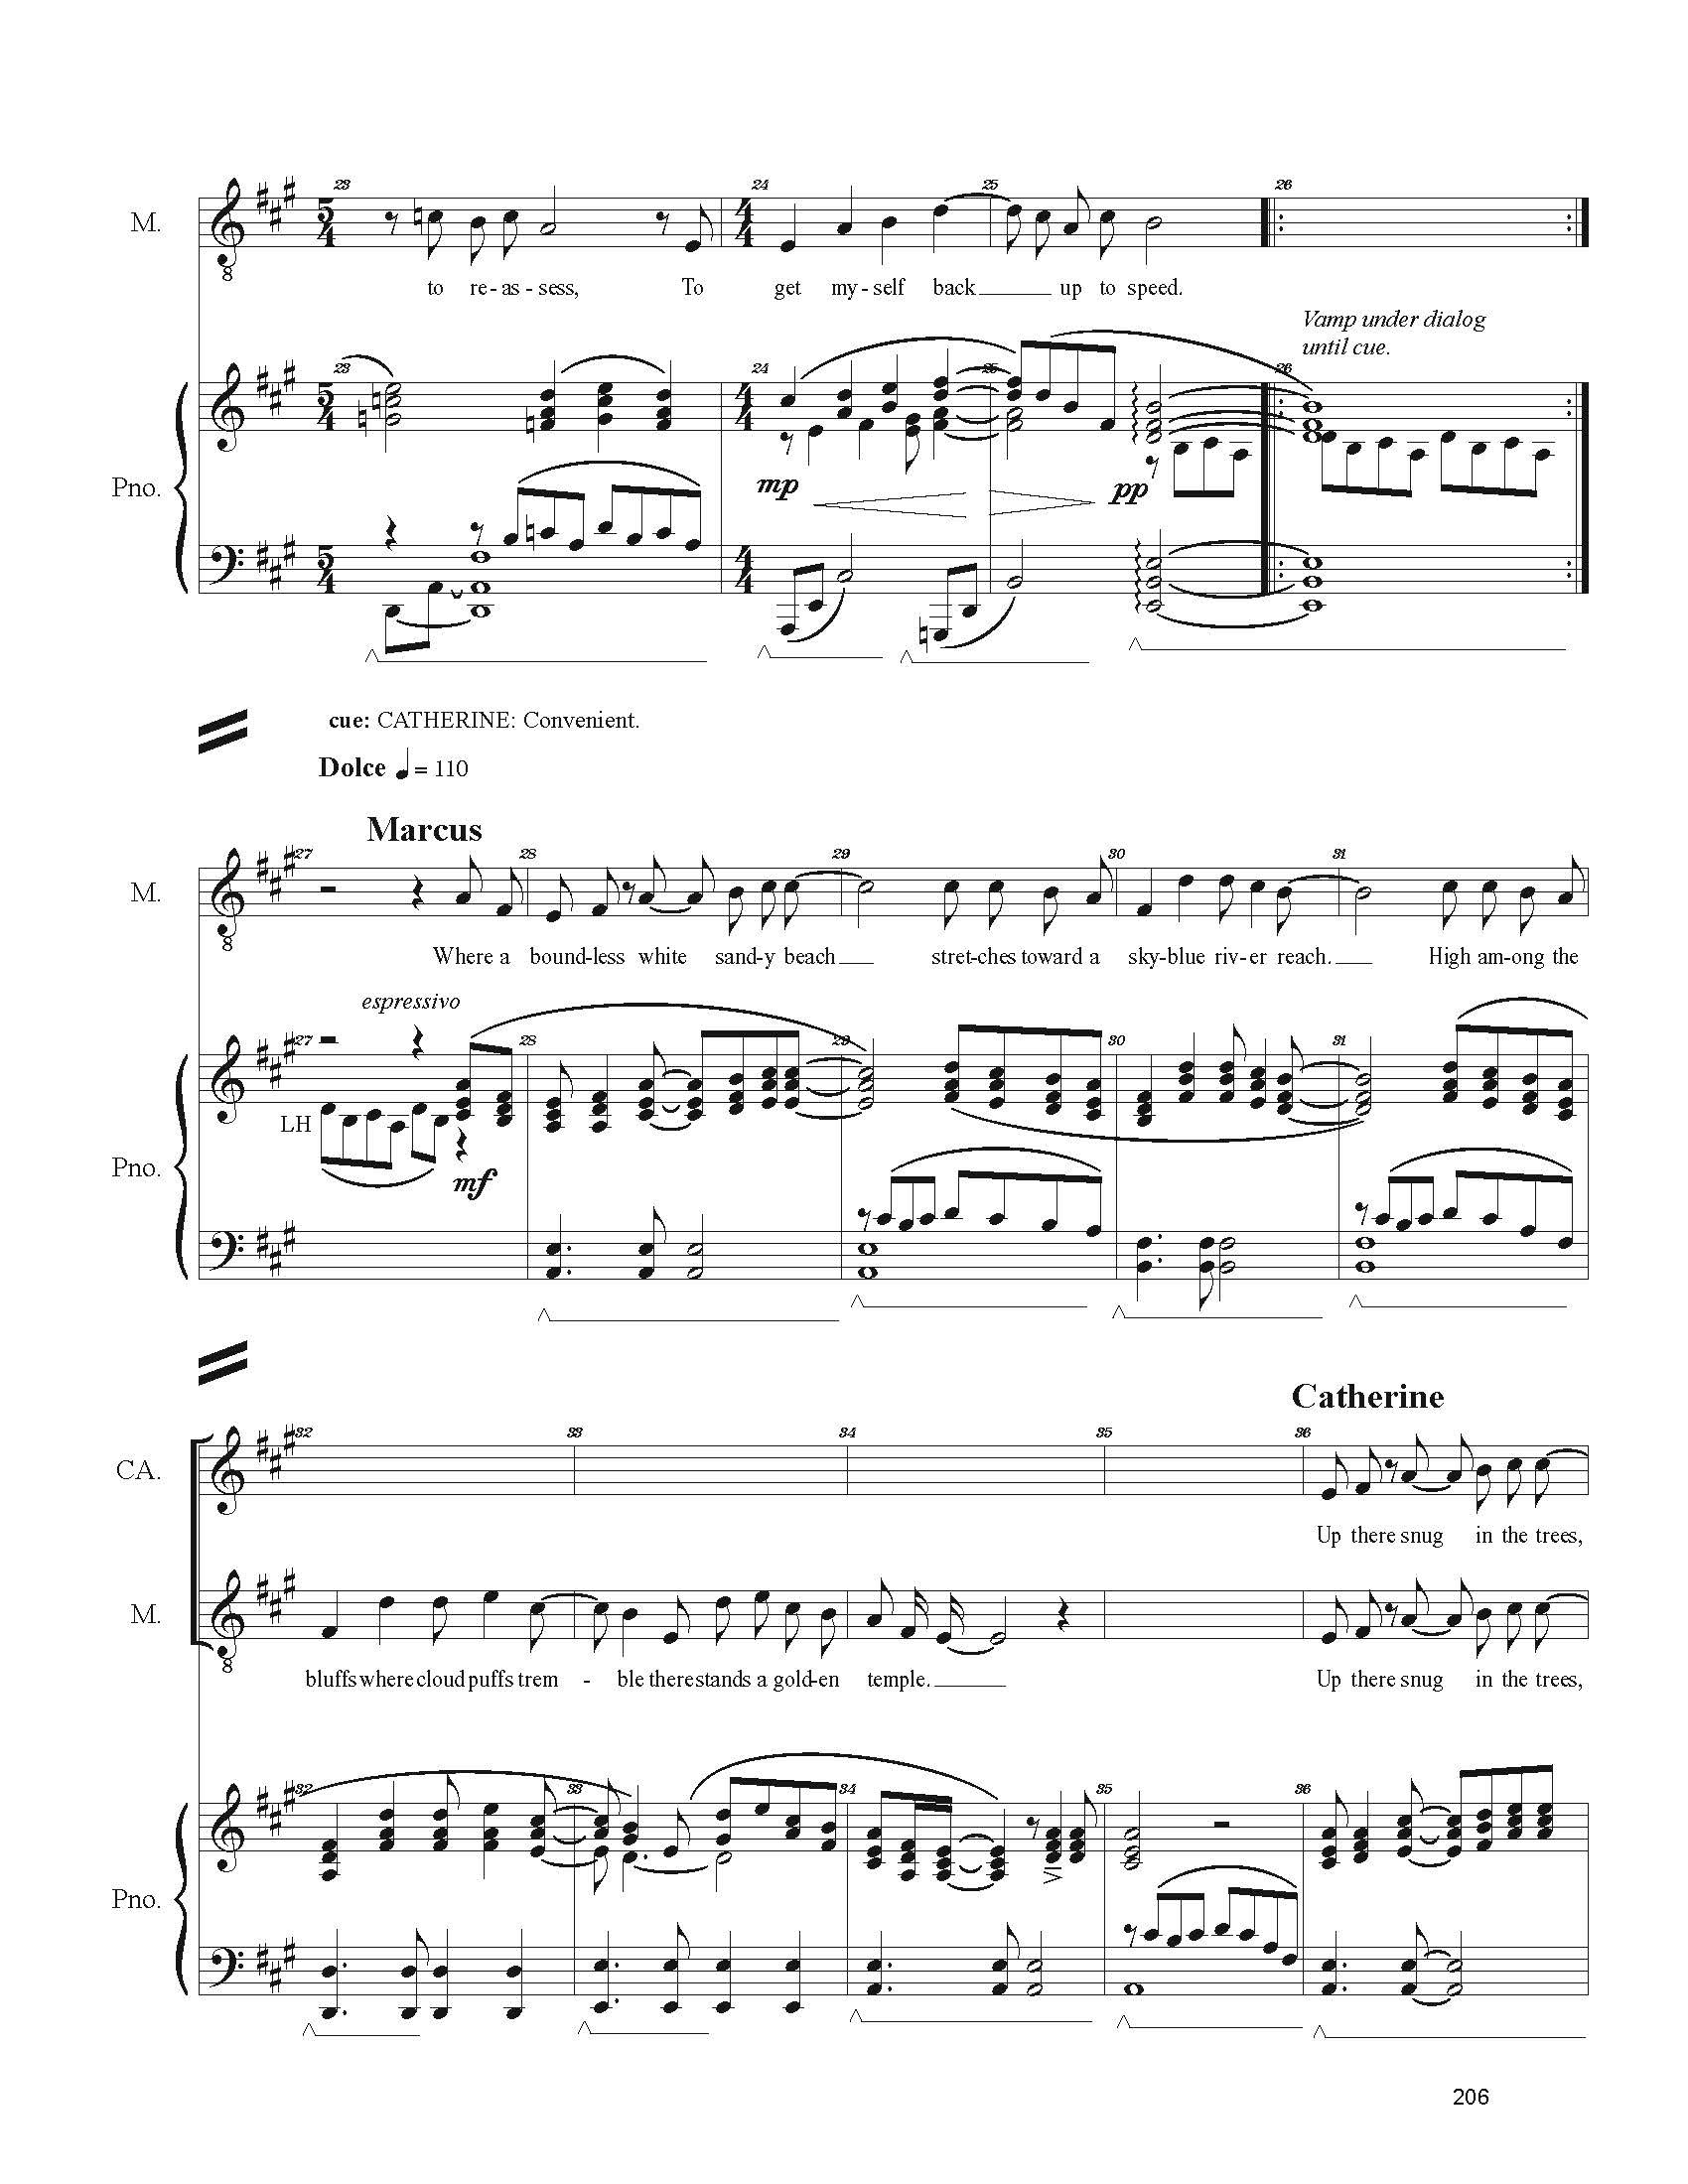 FULL PIANO VOCAL SCORE DRAFT 1 - Score_Page_206.jpg